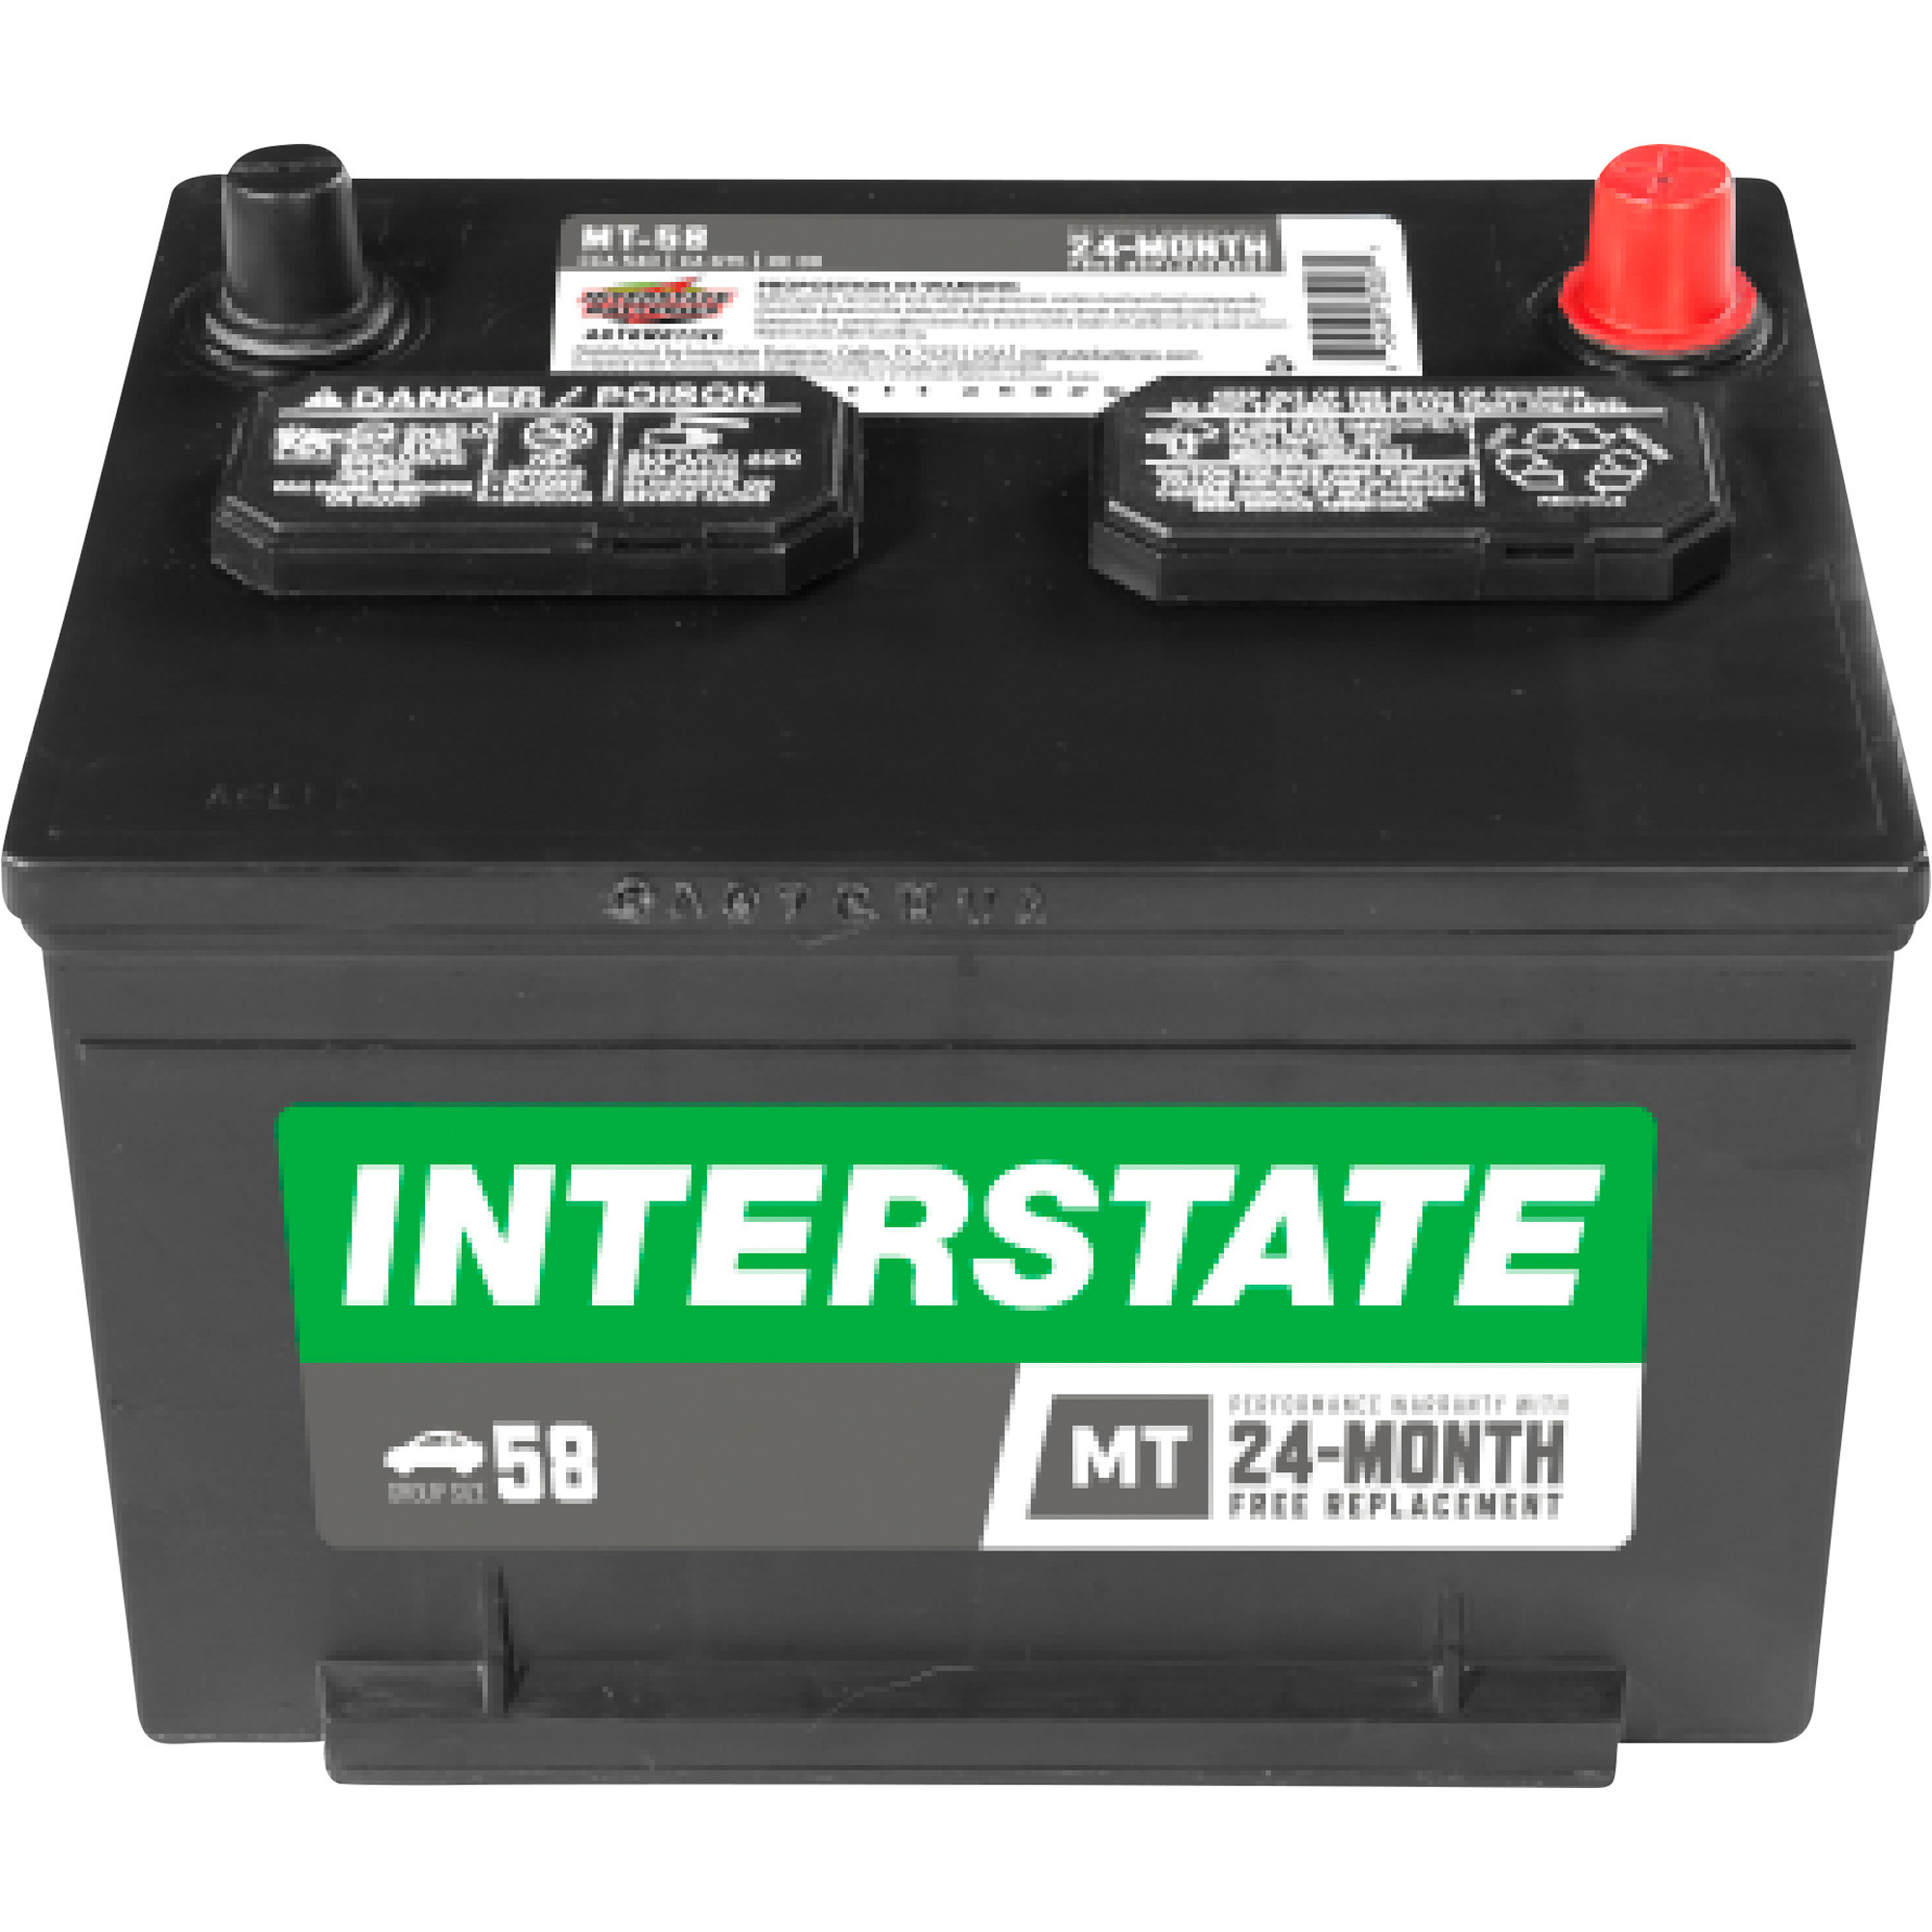 Interstate Batteries Automotive Battery, Group Size 58, 12 Volt, Model MT-58